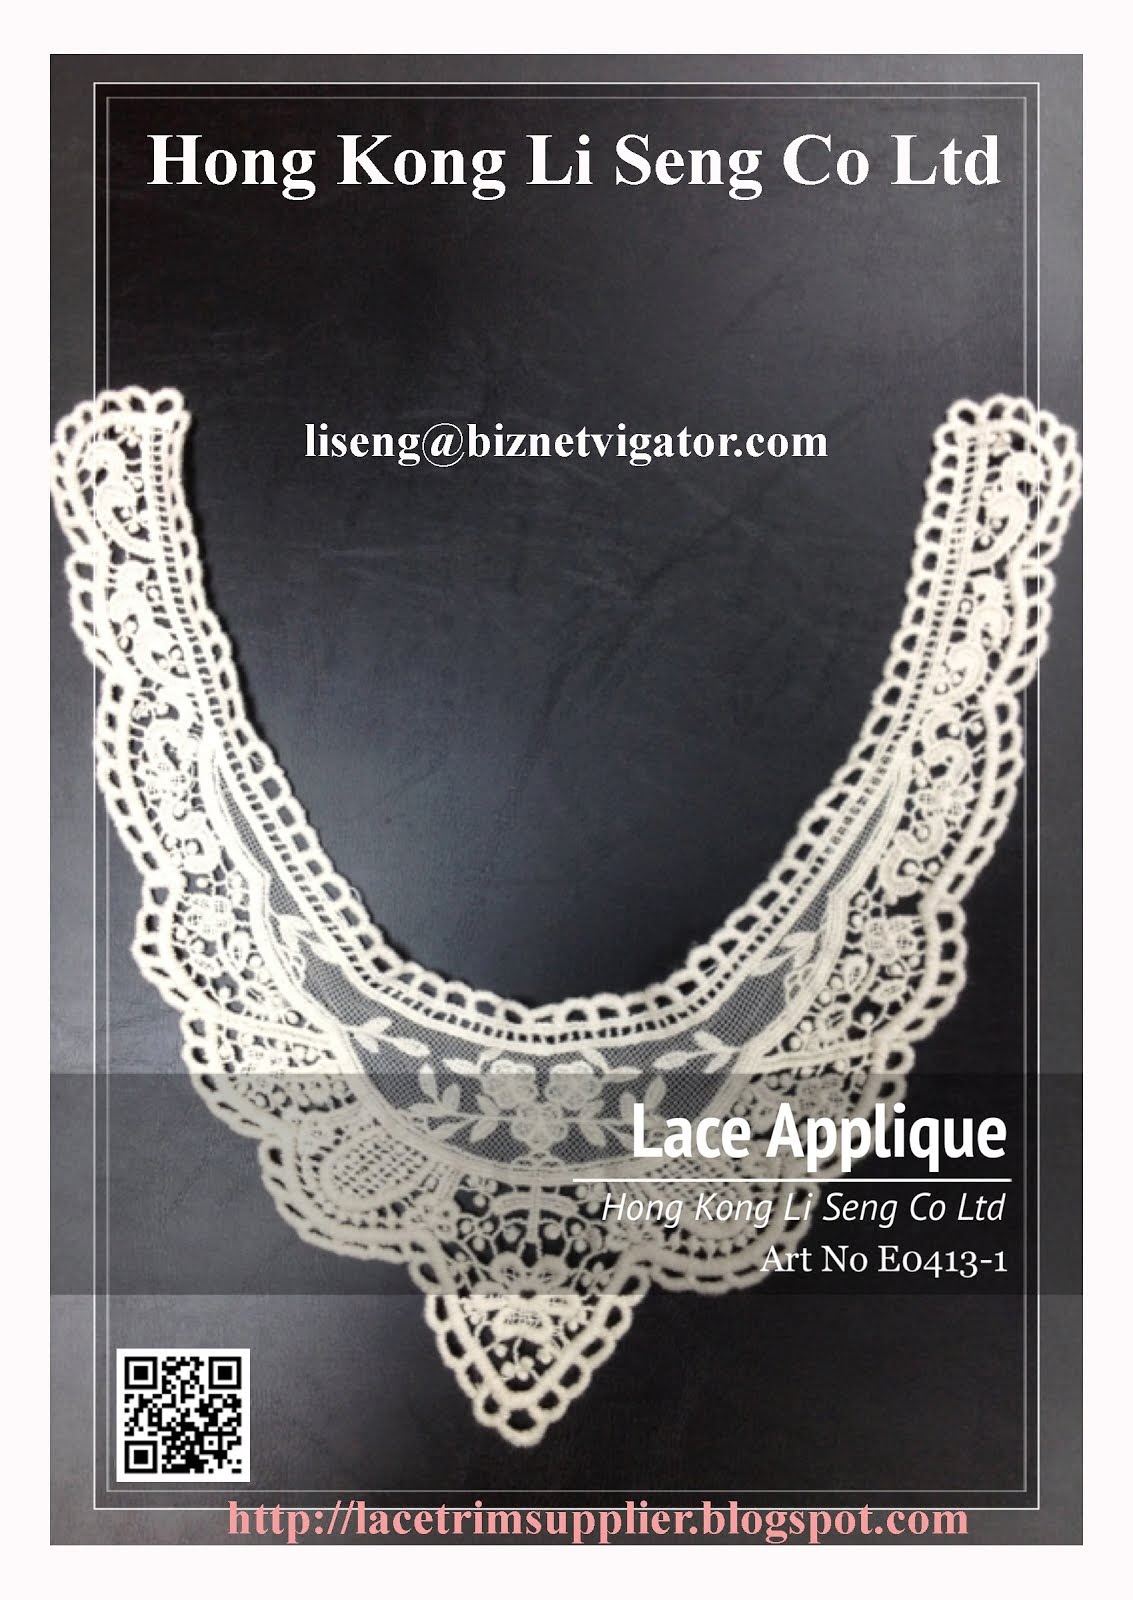 Embroidery Lace Applique Manufacturer and Supplier - Hong Kong Li Seng Co Ltd